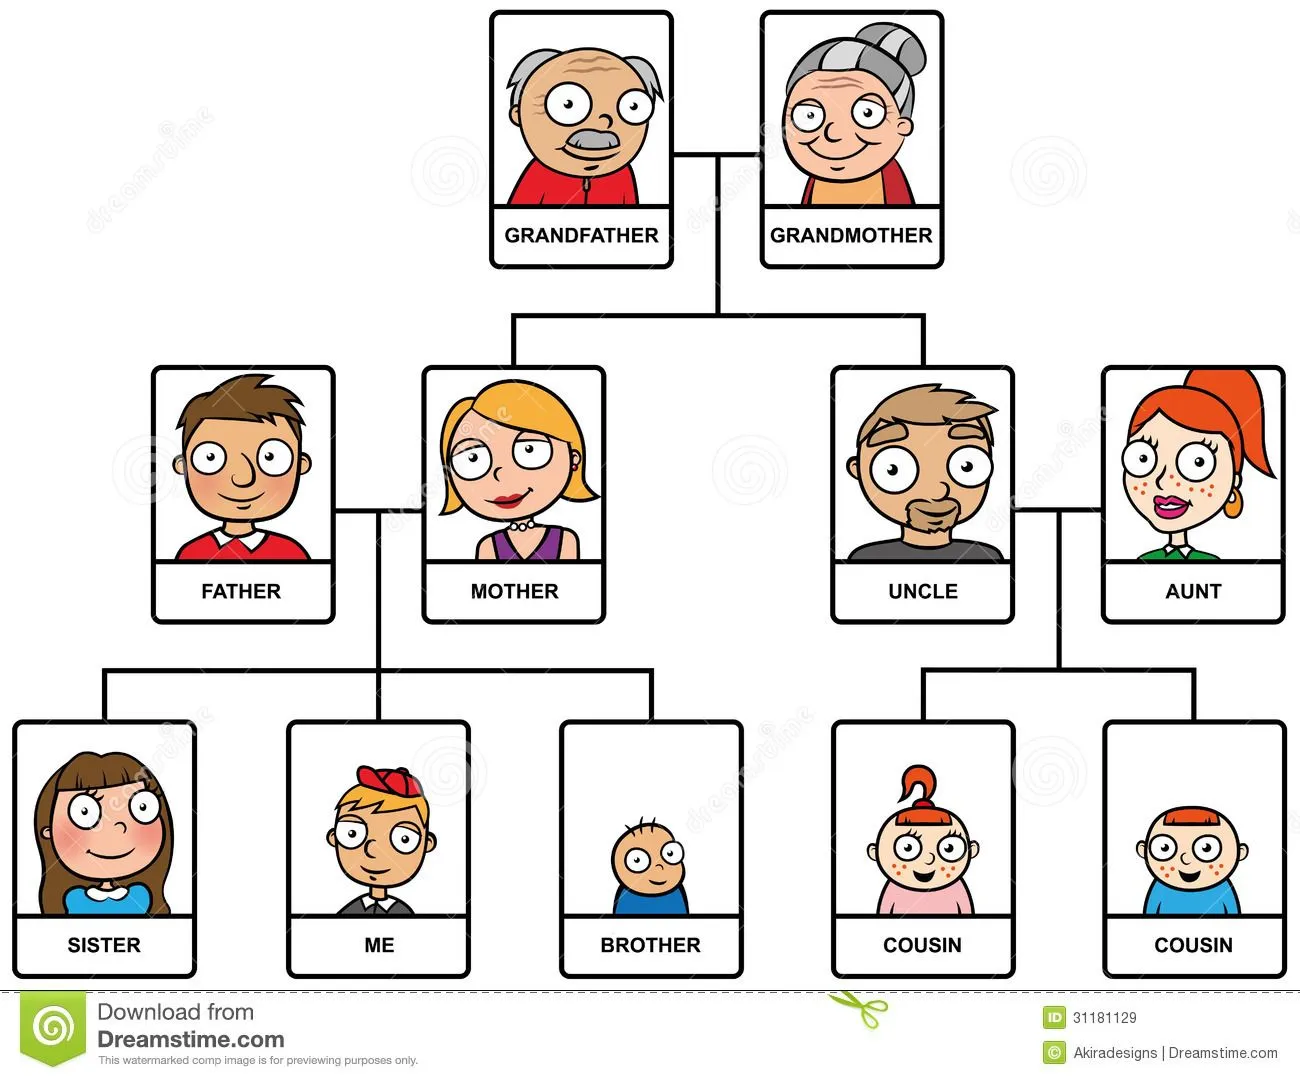 3º primaria: Family tree / árbol familiar - English Corner!